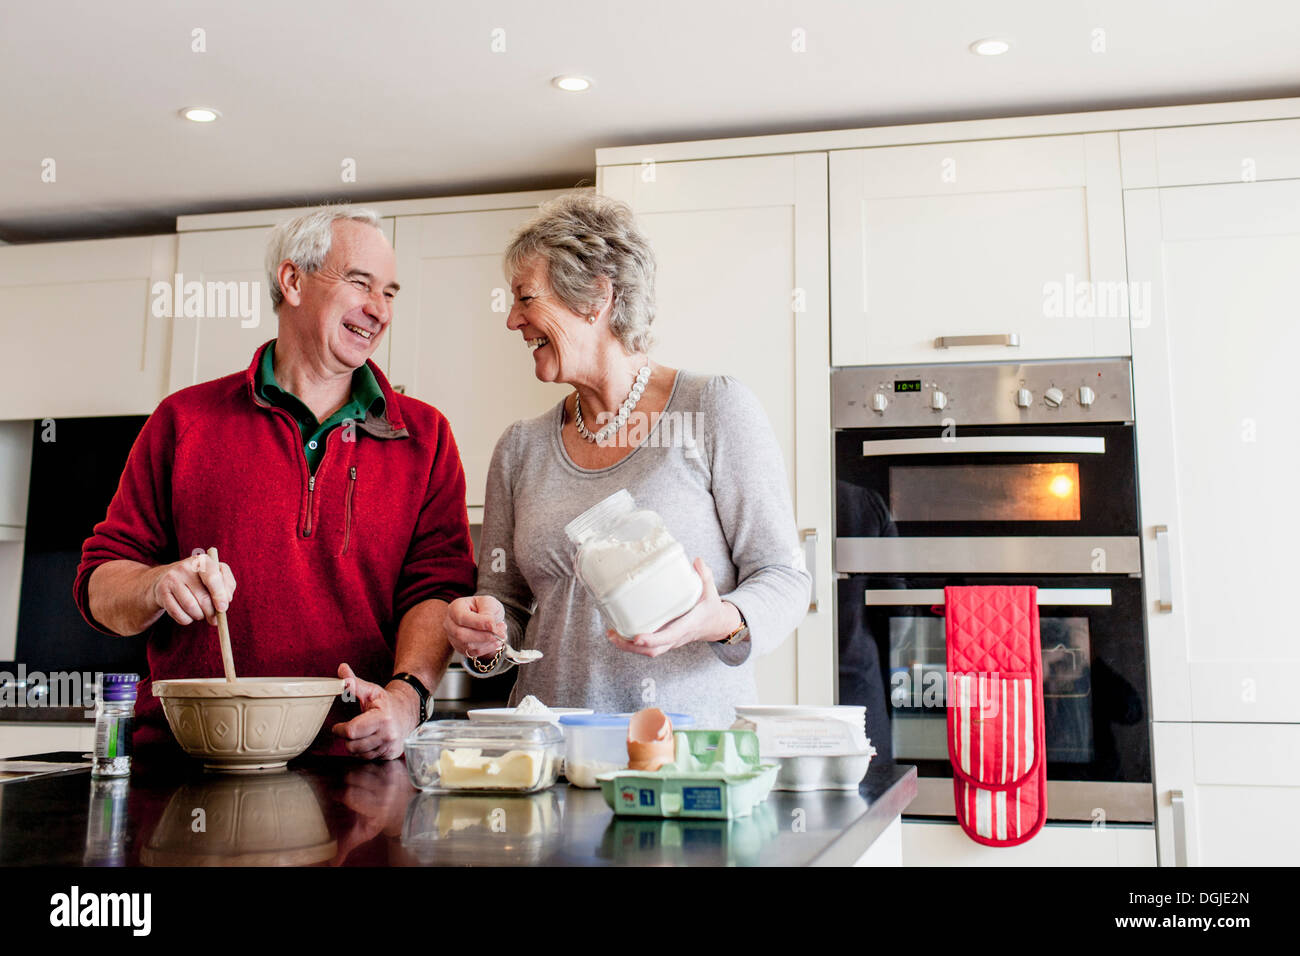 Senior couple baking together in kitchen Banque D'Images